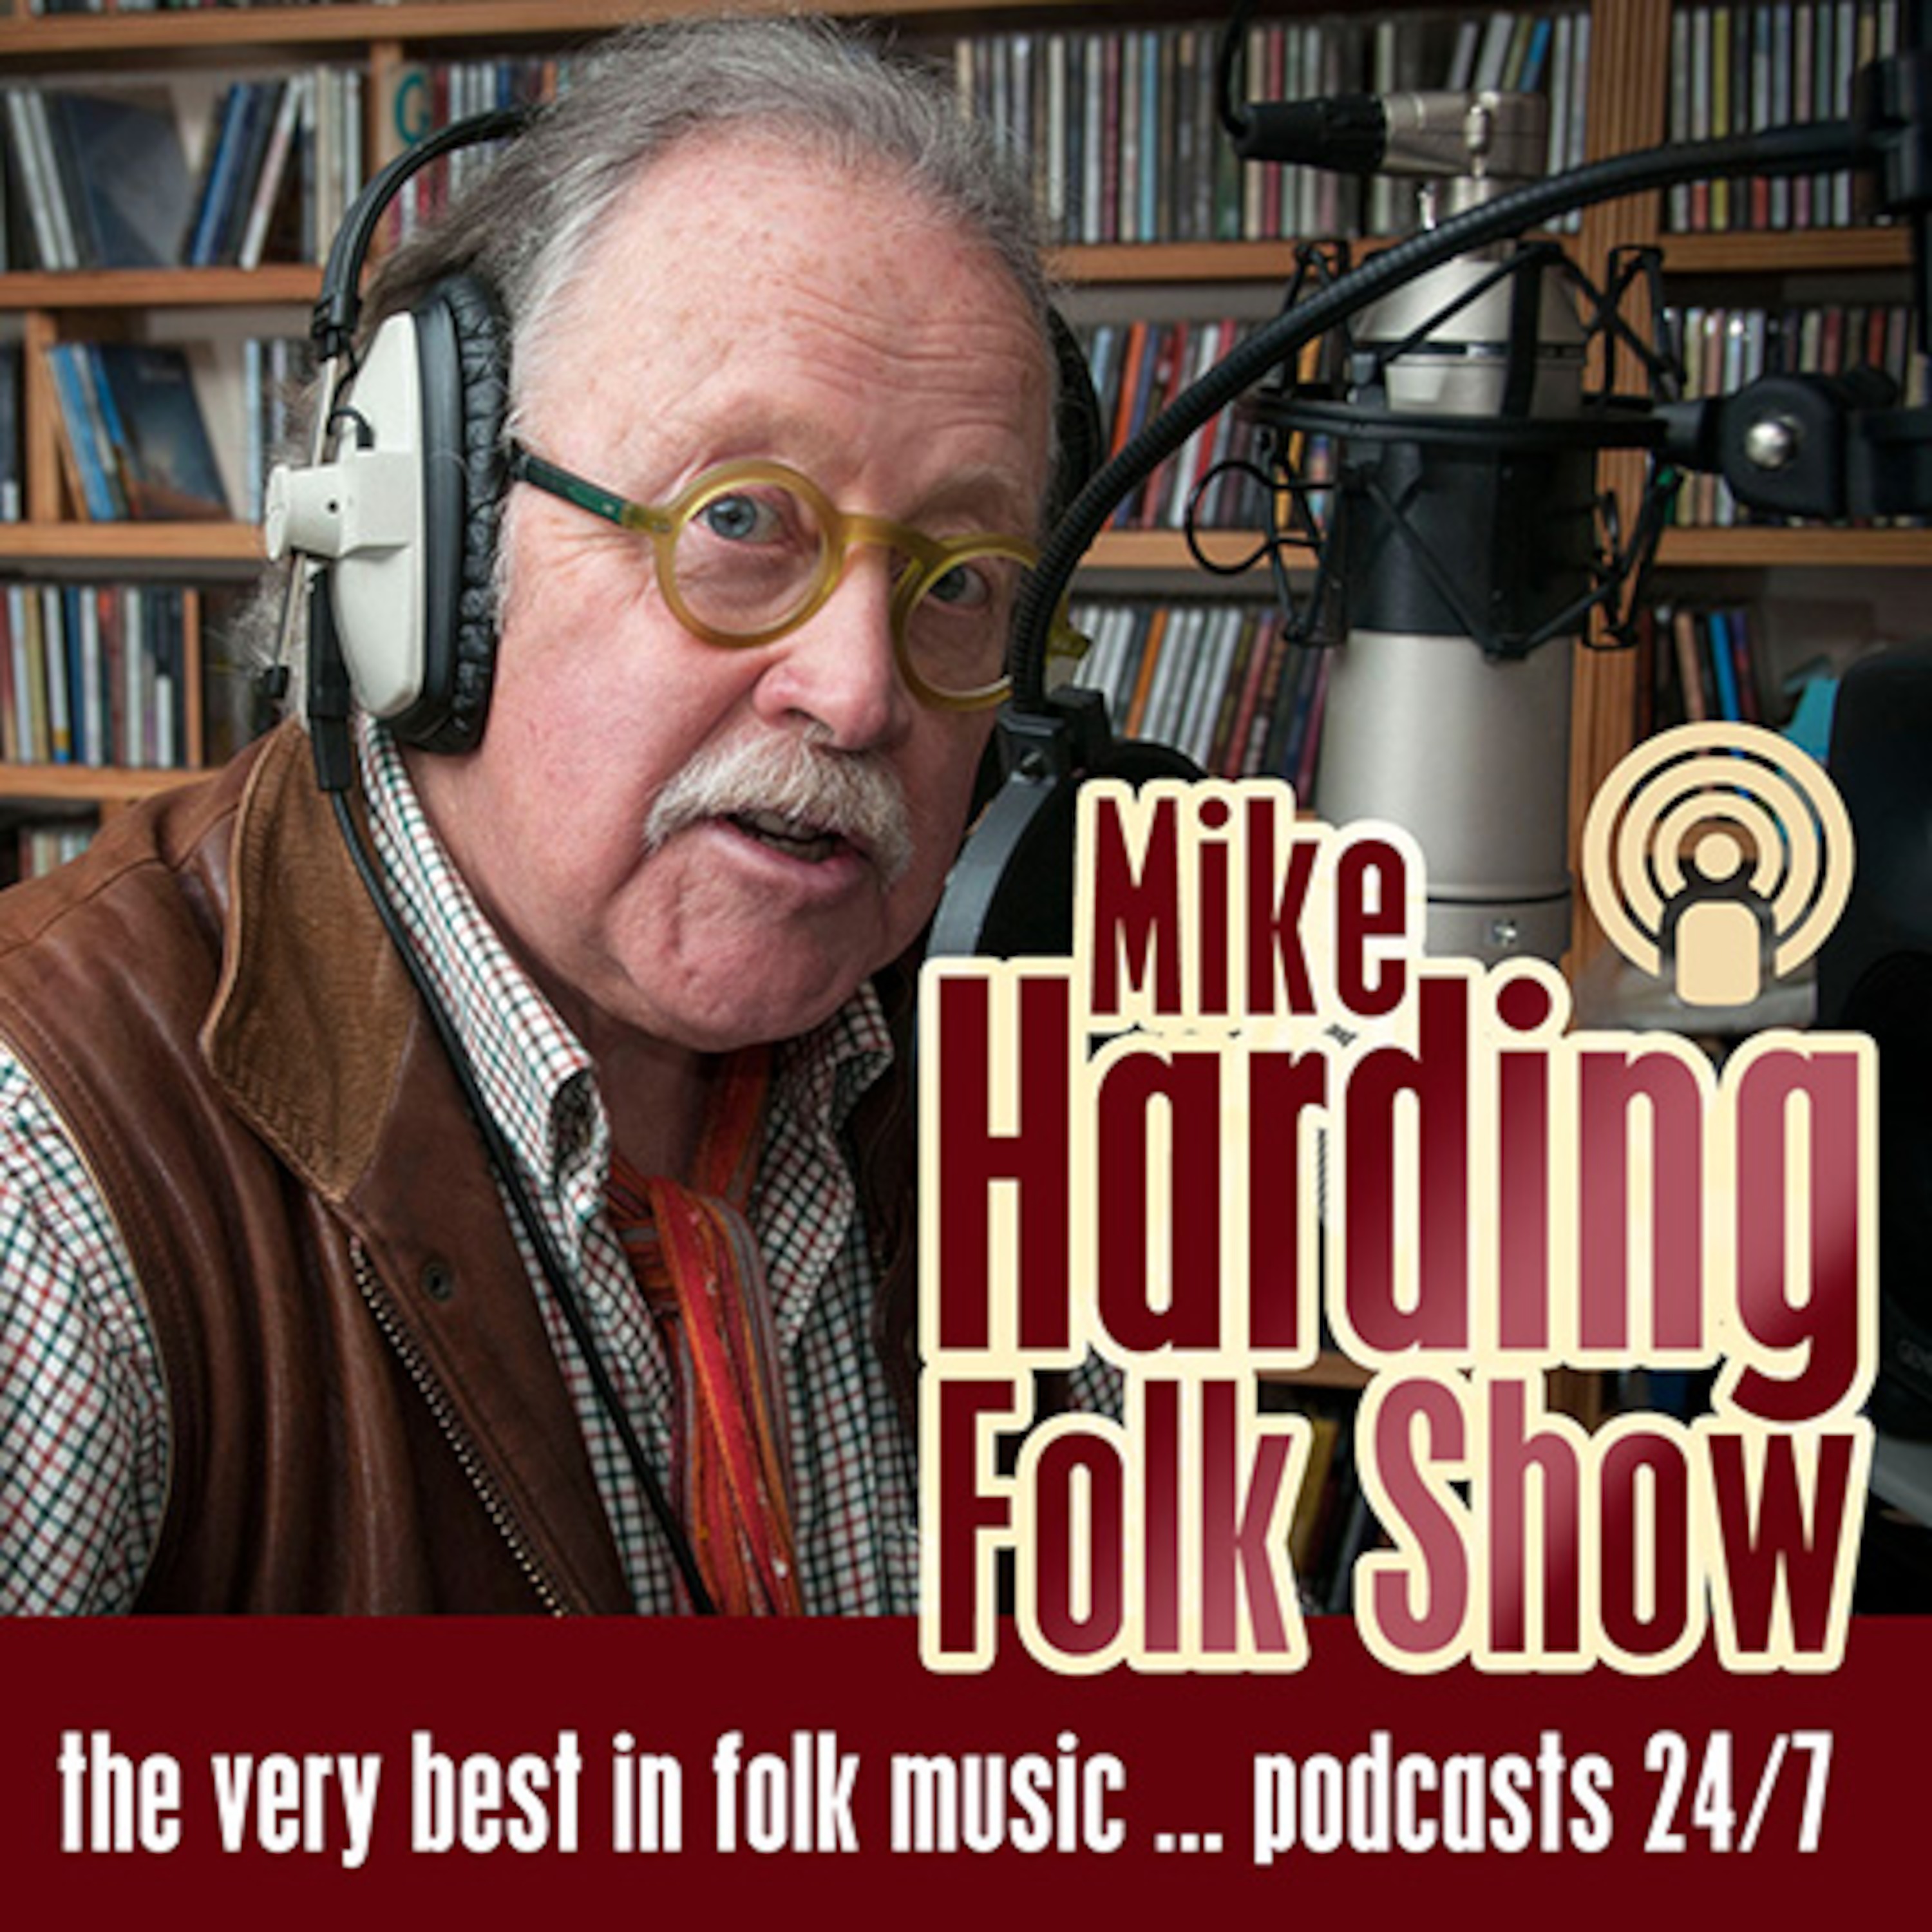 Mike Harding Folk Show 133